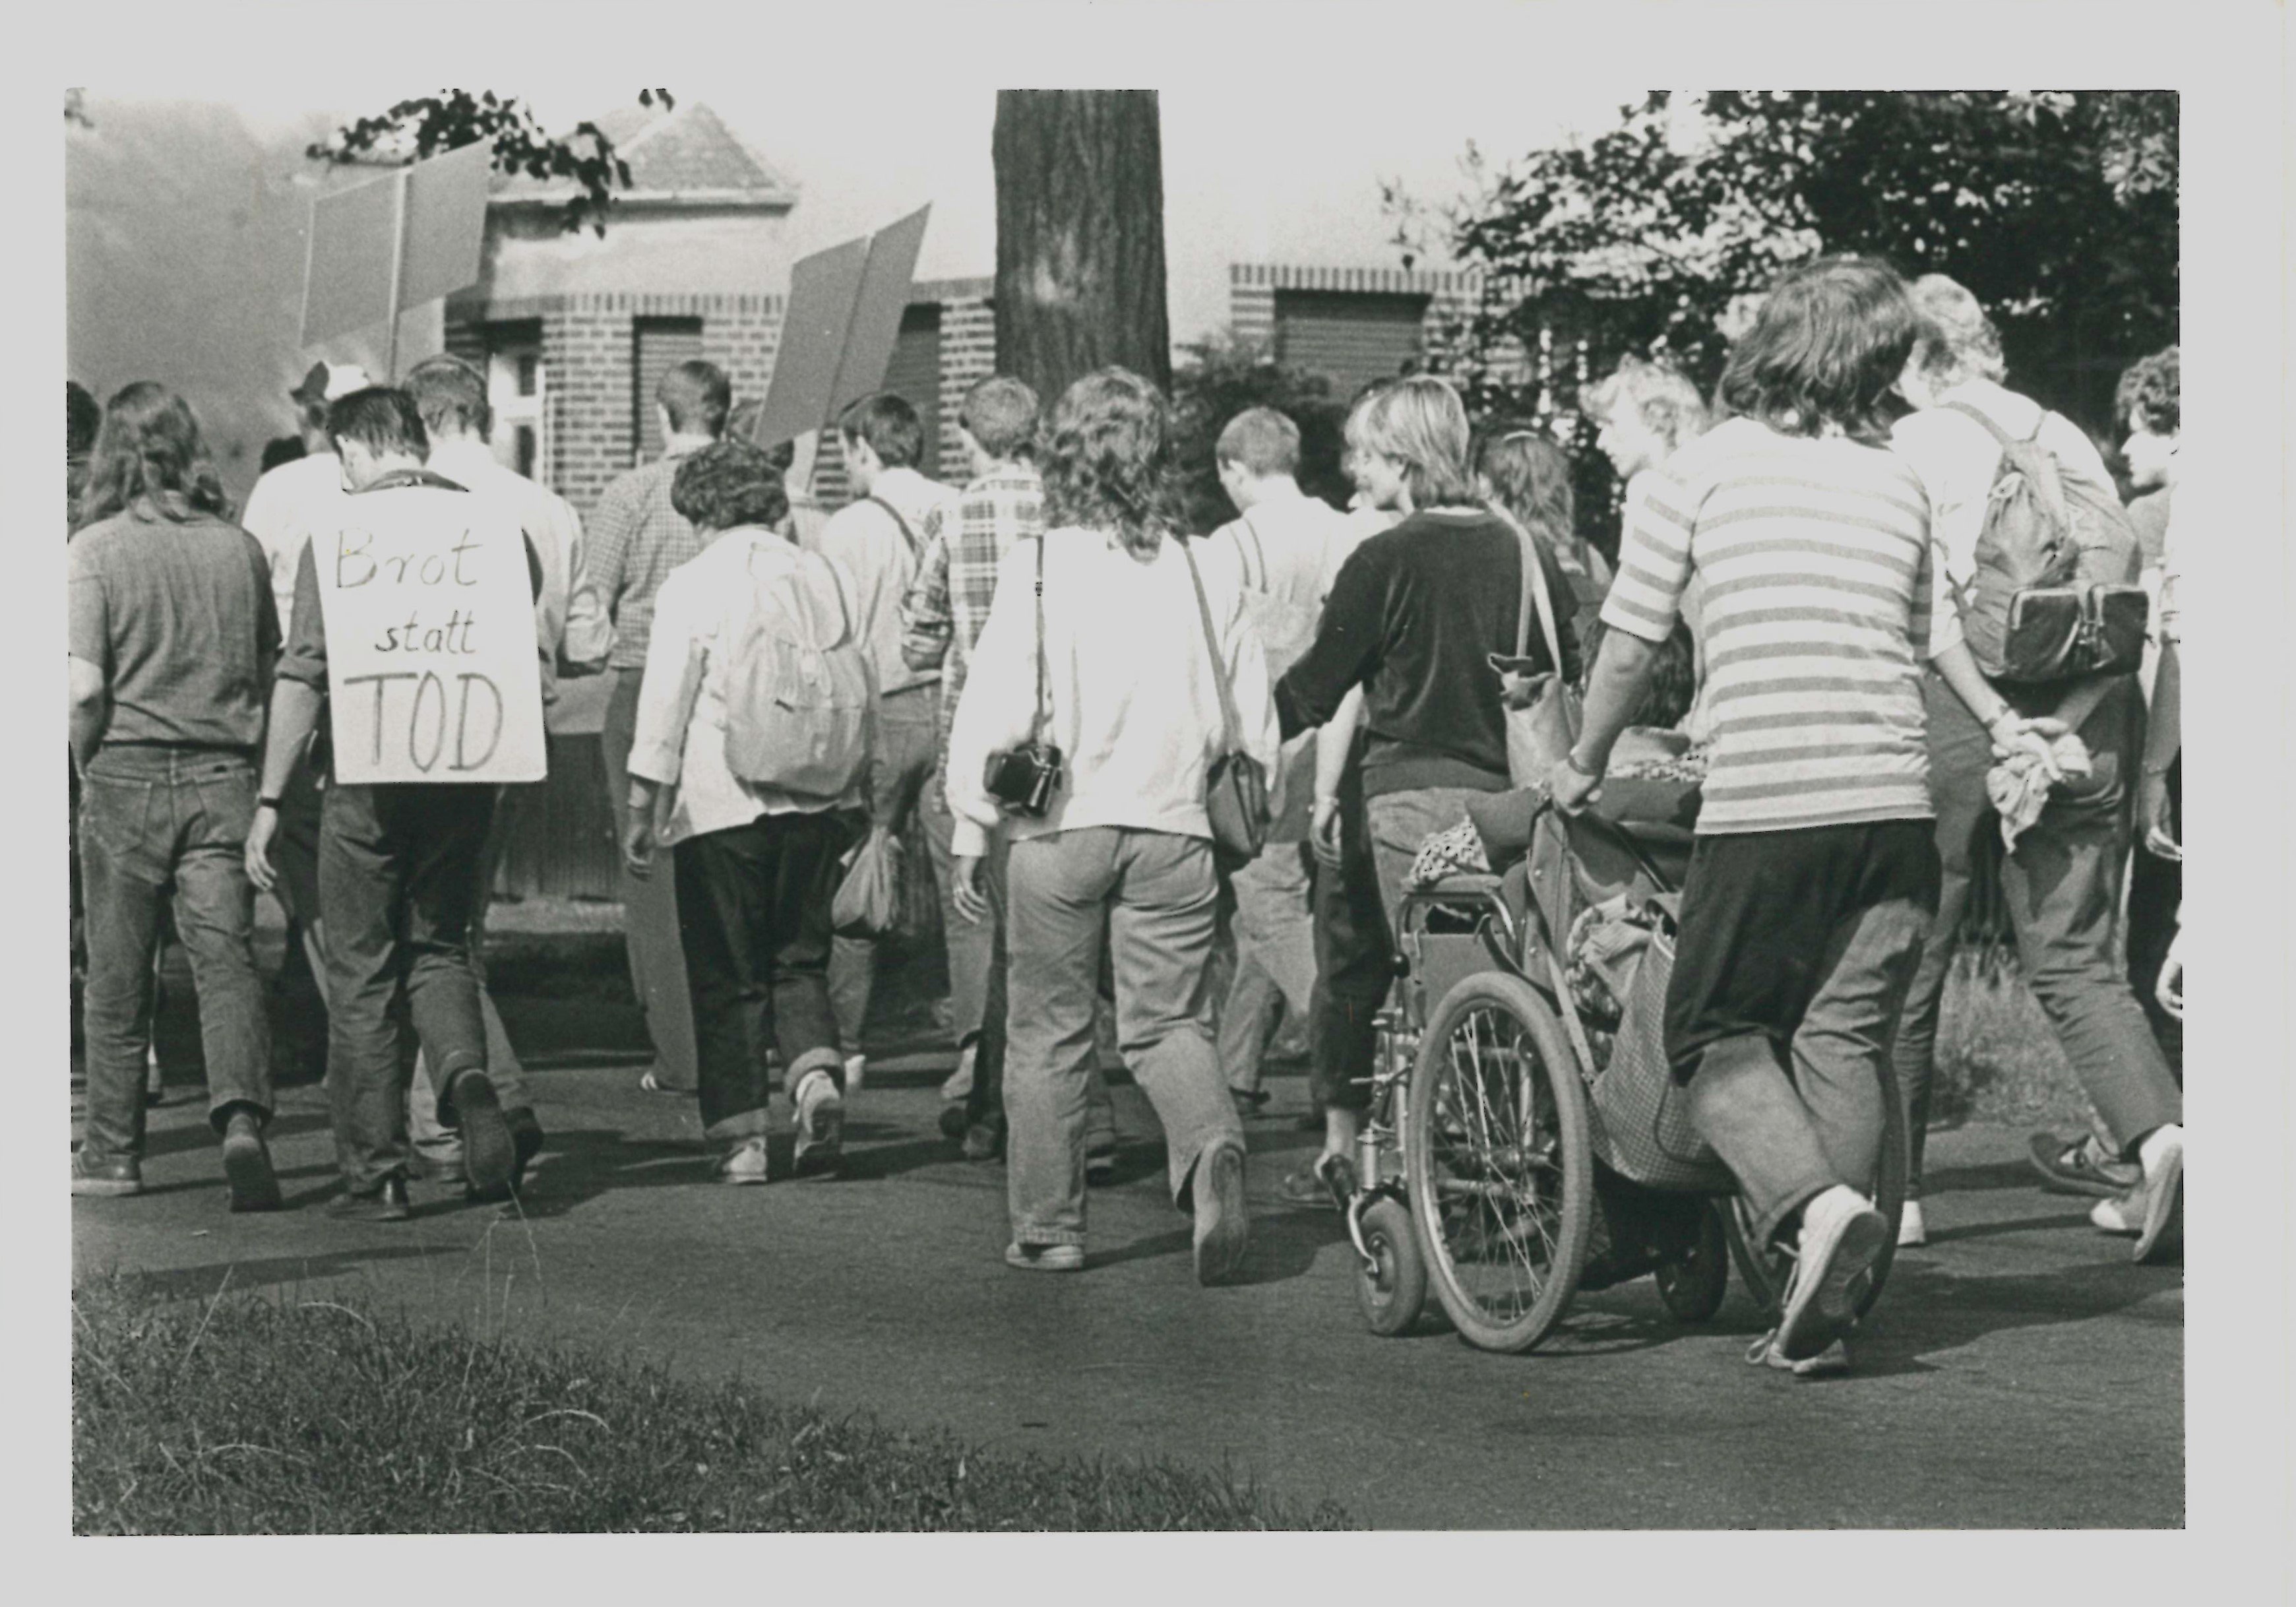 Olof-Palme-Marsch 1987: Teilnehmer mit Plakat: "Brot statt Tod" (DDR Geschichtsmuseum im Dokumentationszentrum Perleberg CC BY-SA)